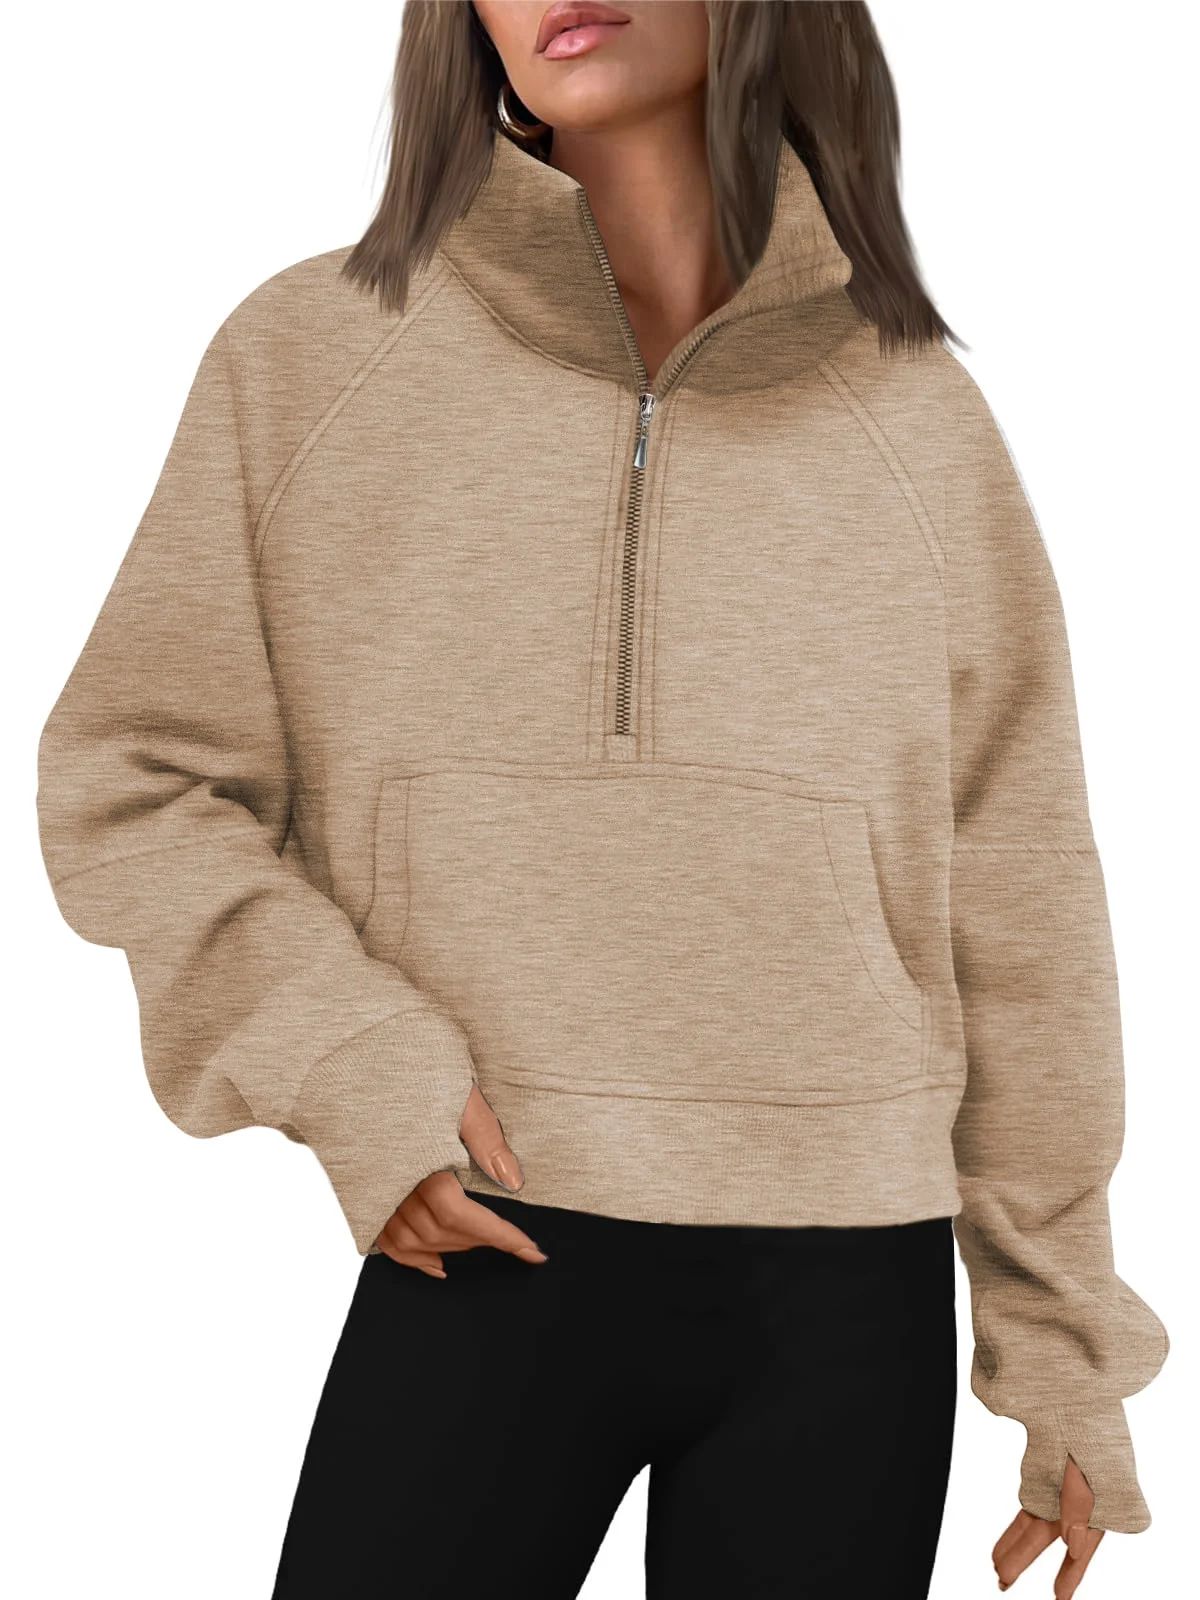 Rosvigor Sweatshirt for Women Half Zip Cropped Pullover Fleece Hoodies Fall Tops Thumb Hole | Walmart (US)